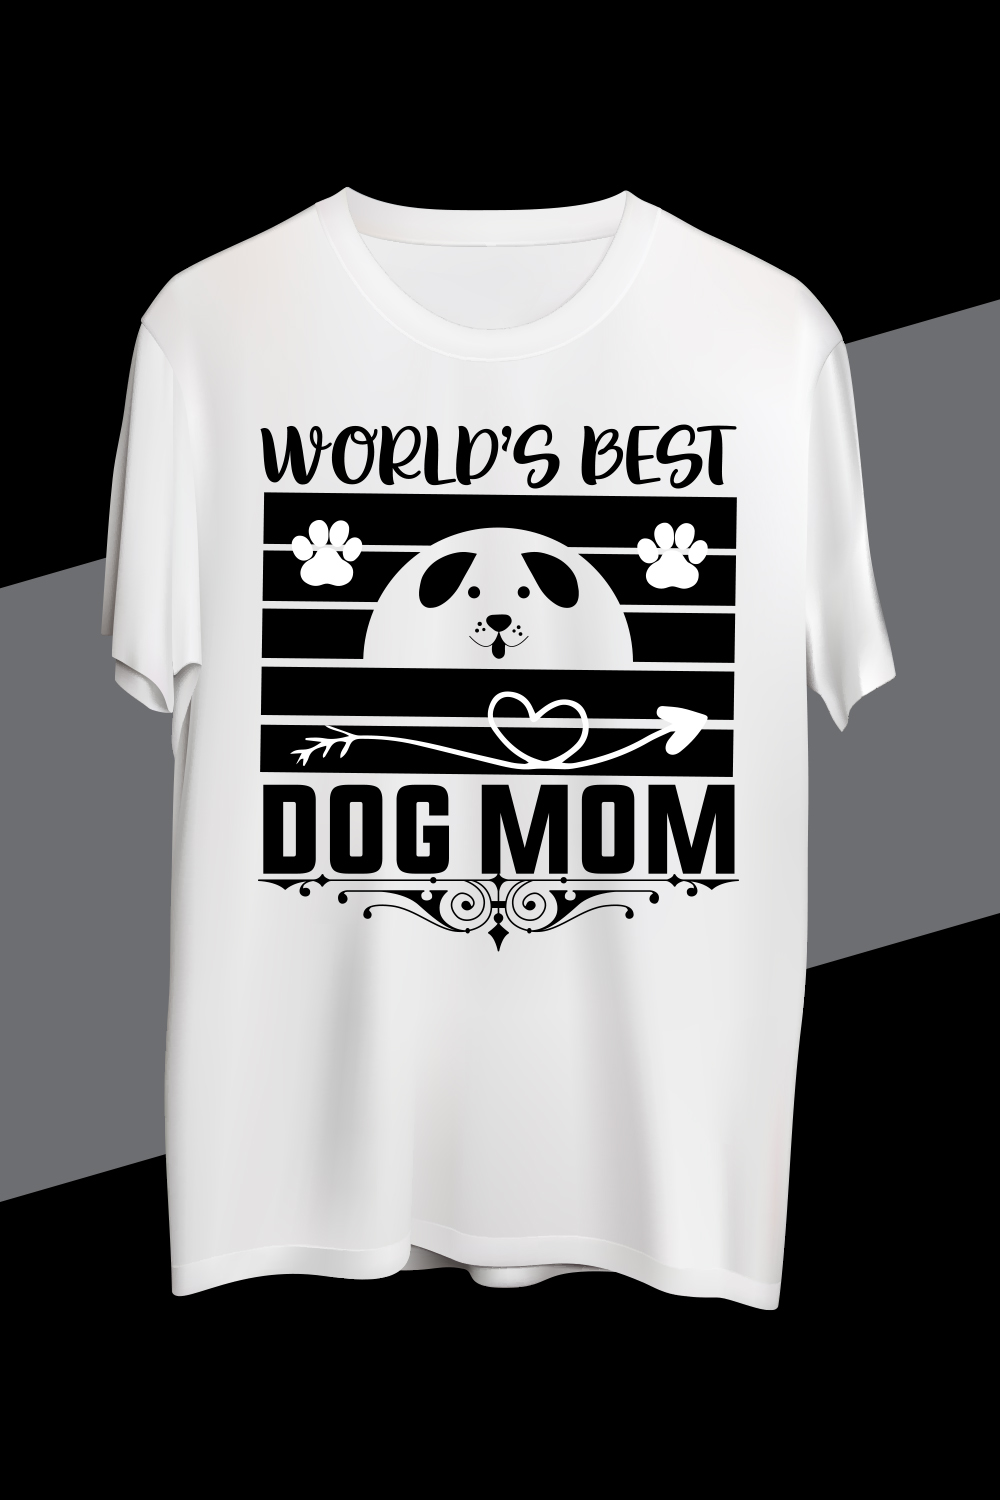 World’s Best Dog Mom T-shirt design pinterest preview image.